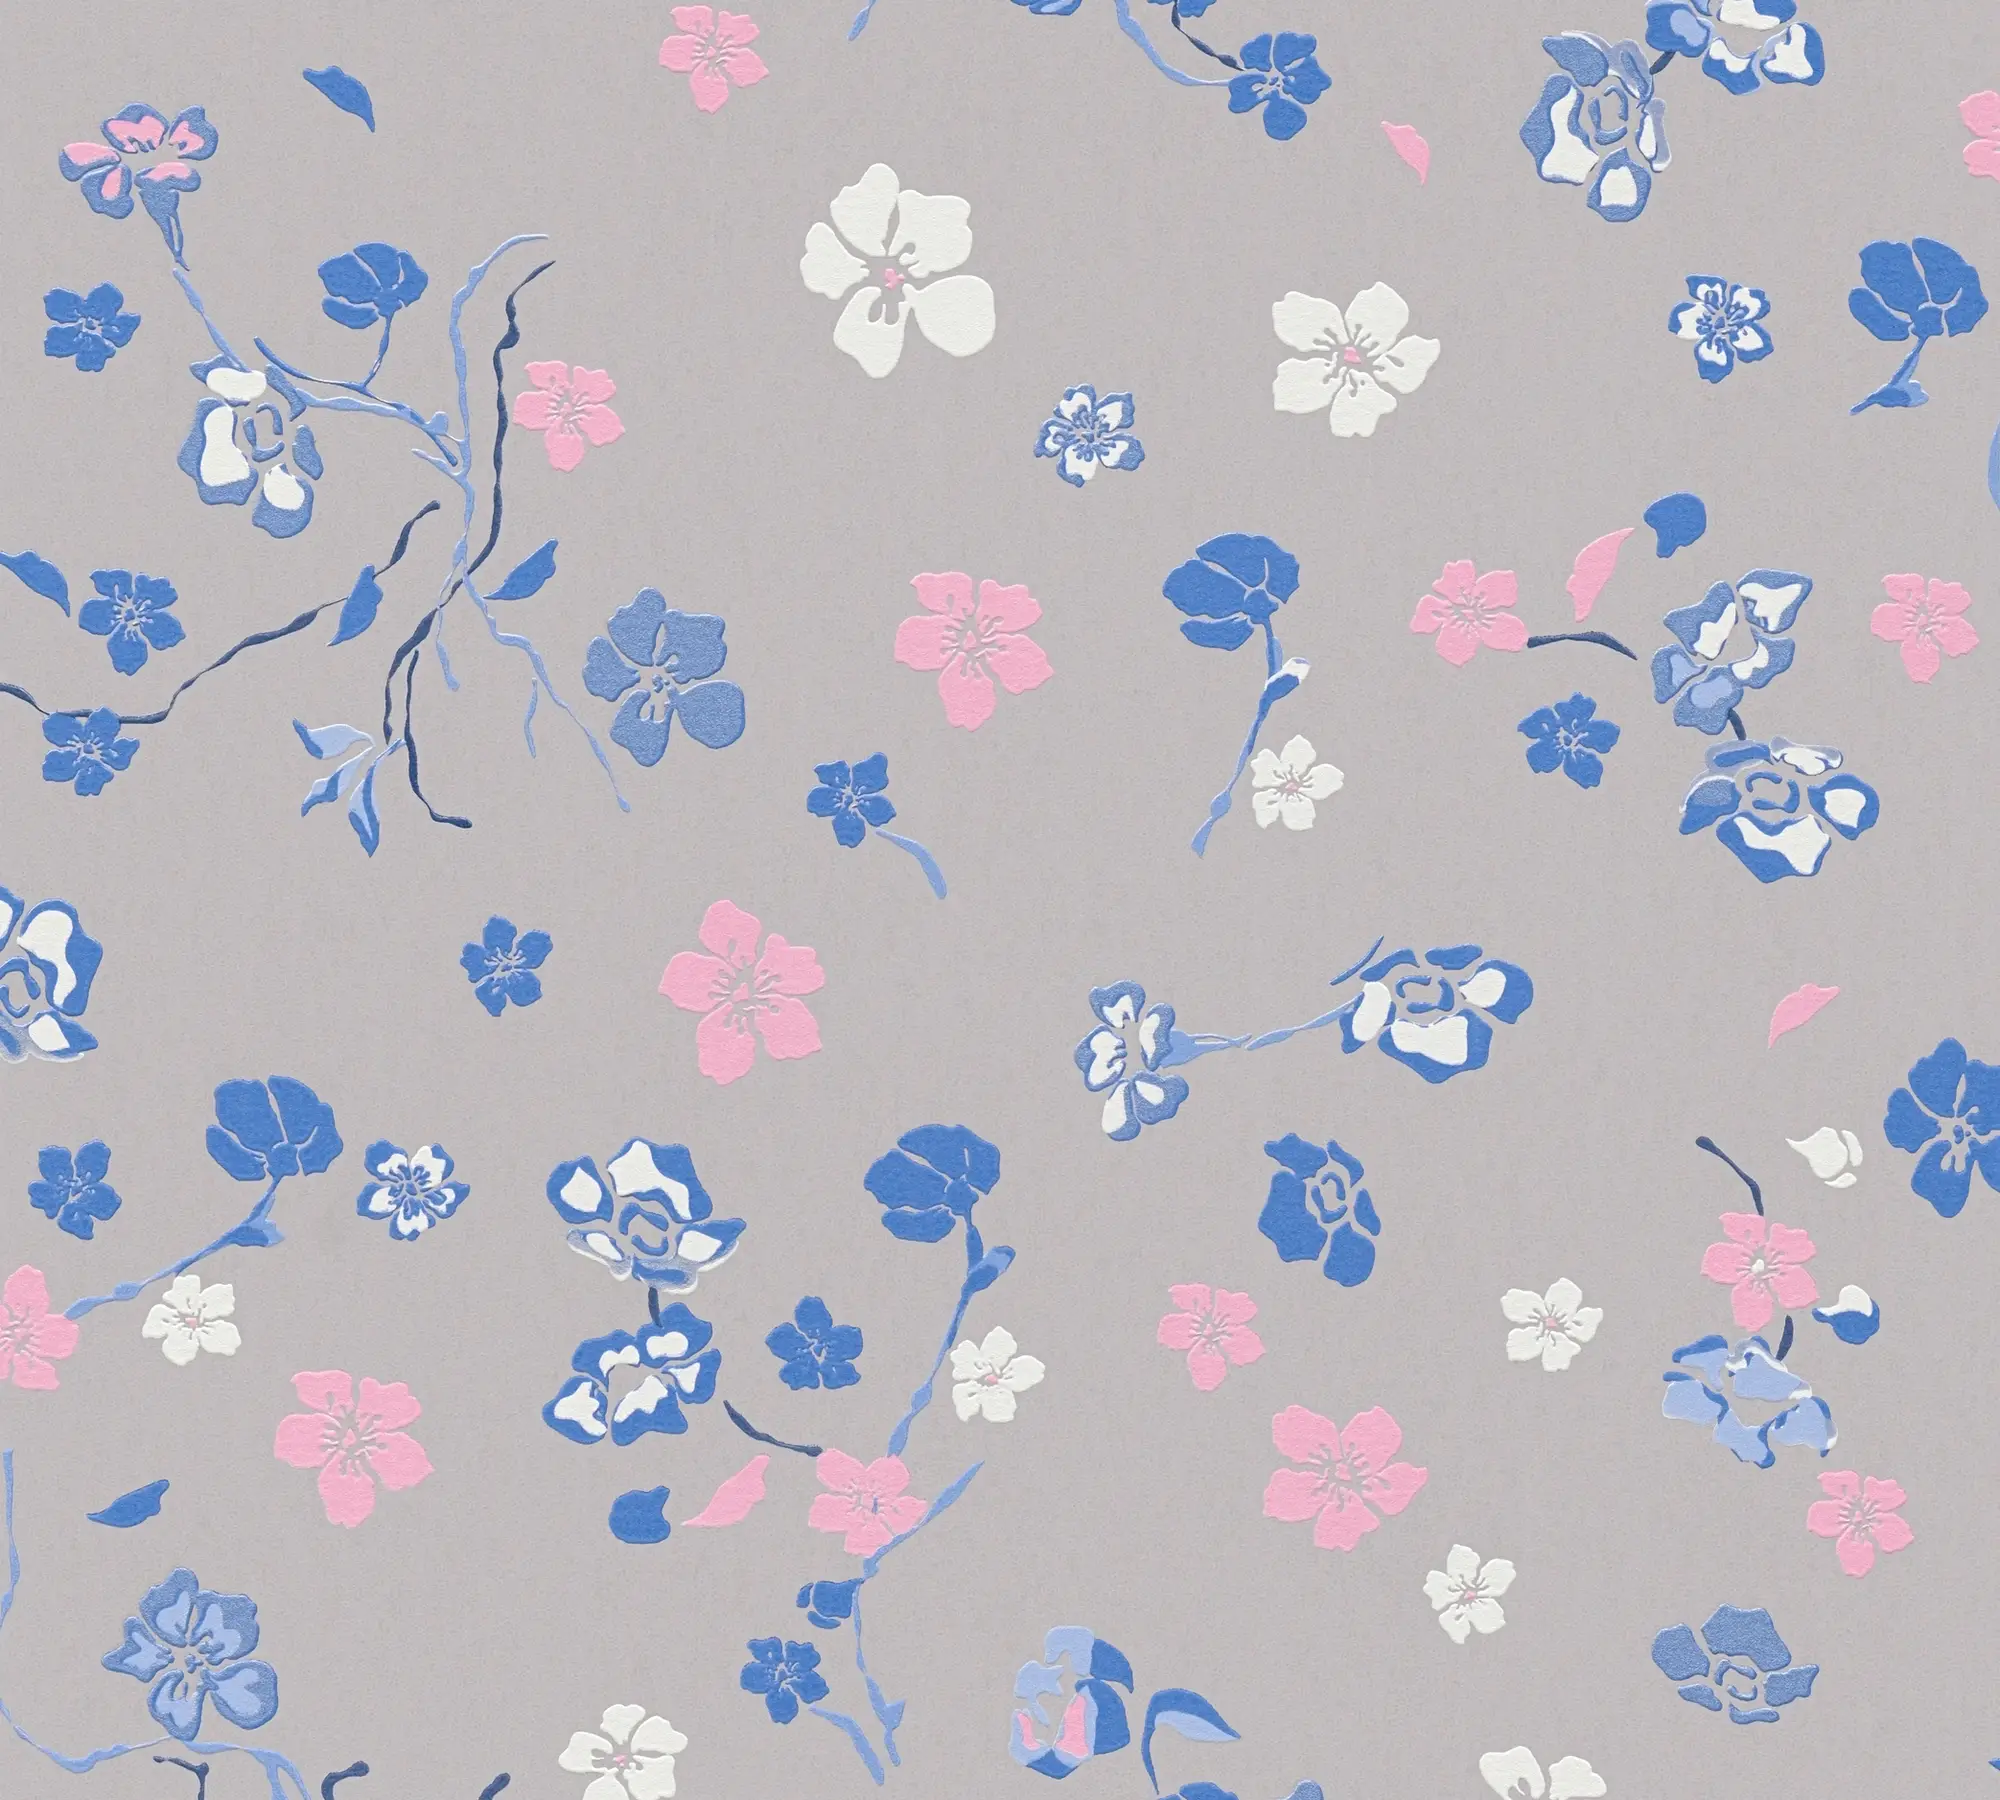 Vliestapete Floral Grau Blau Wei脽 Rosa